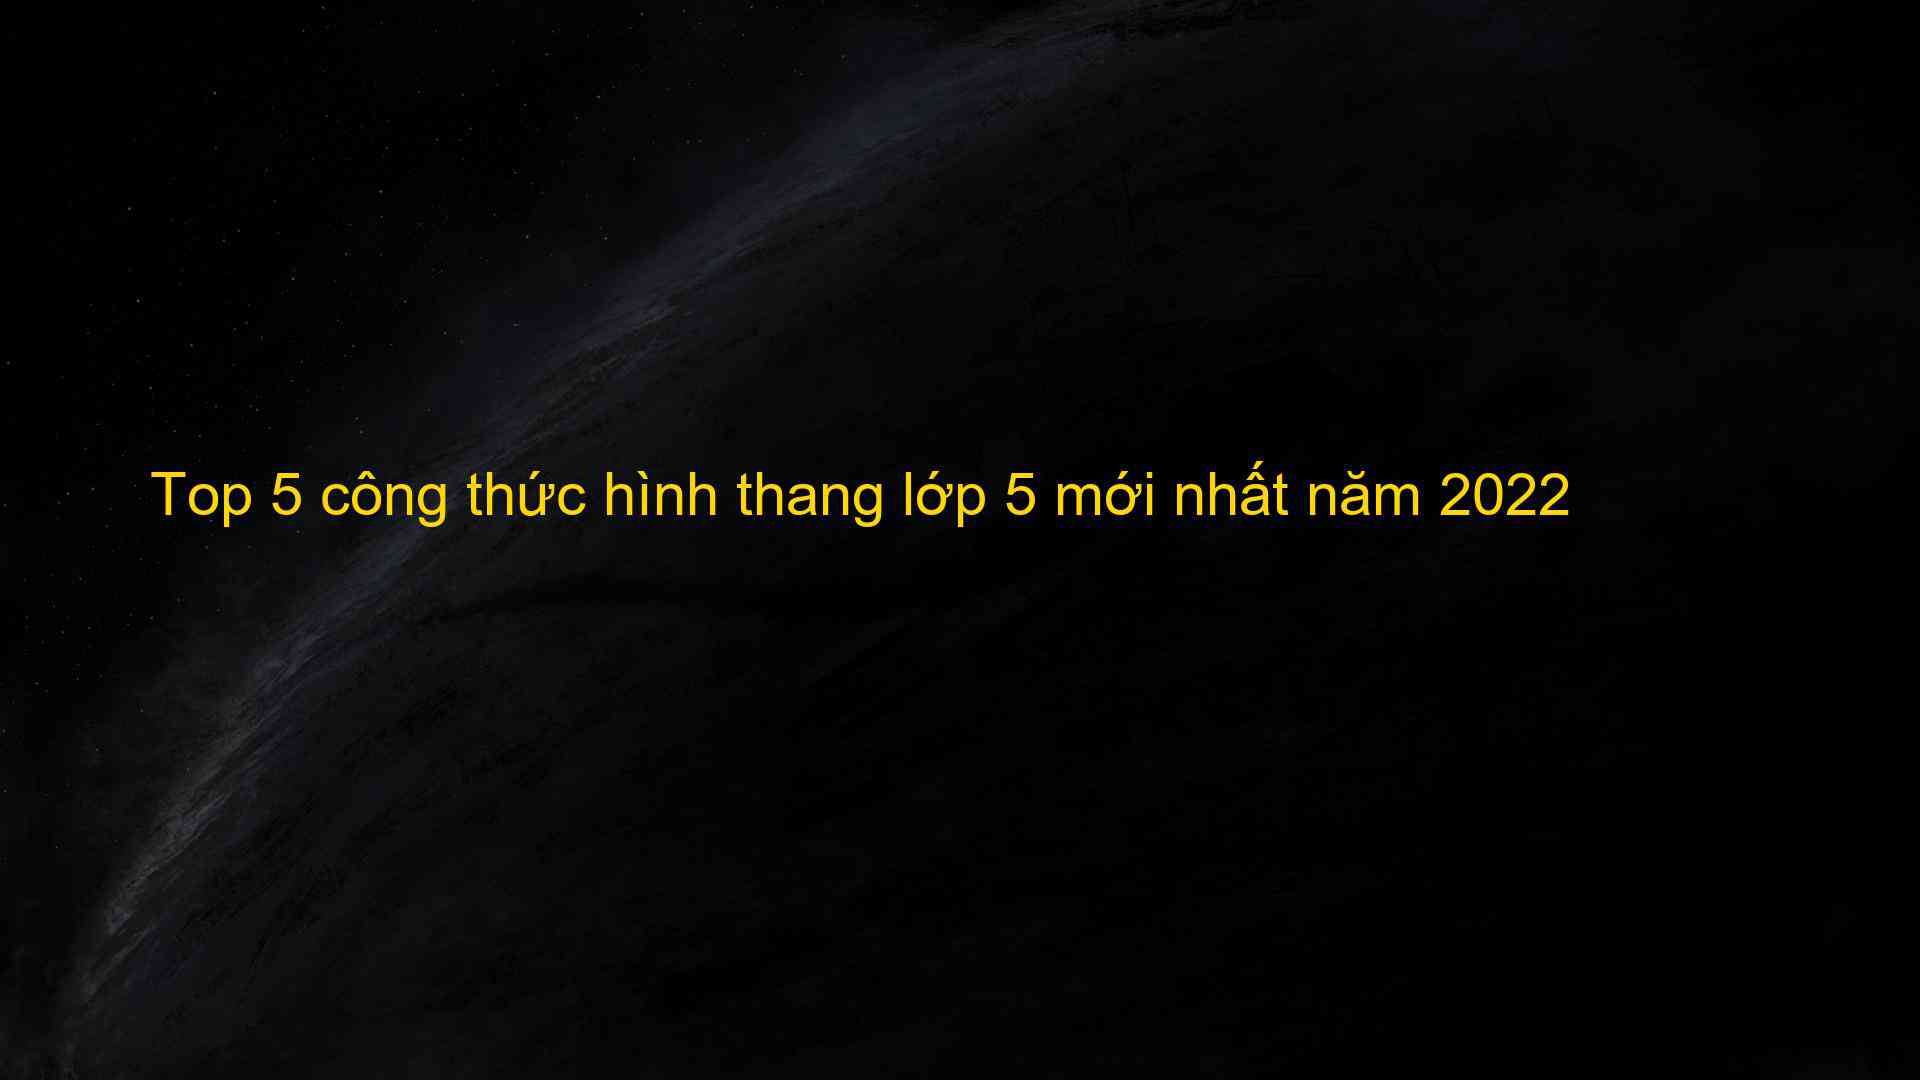 Top 5 cong thuc hinh thang lop 5 moi nhat nam 2022 1659886894